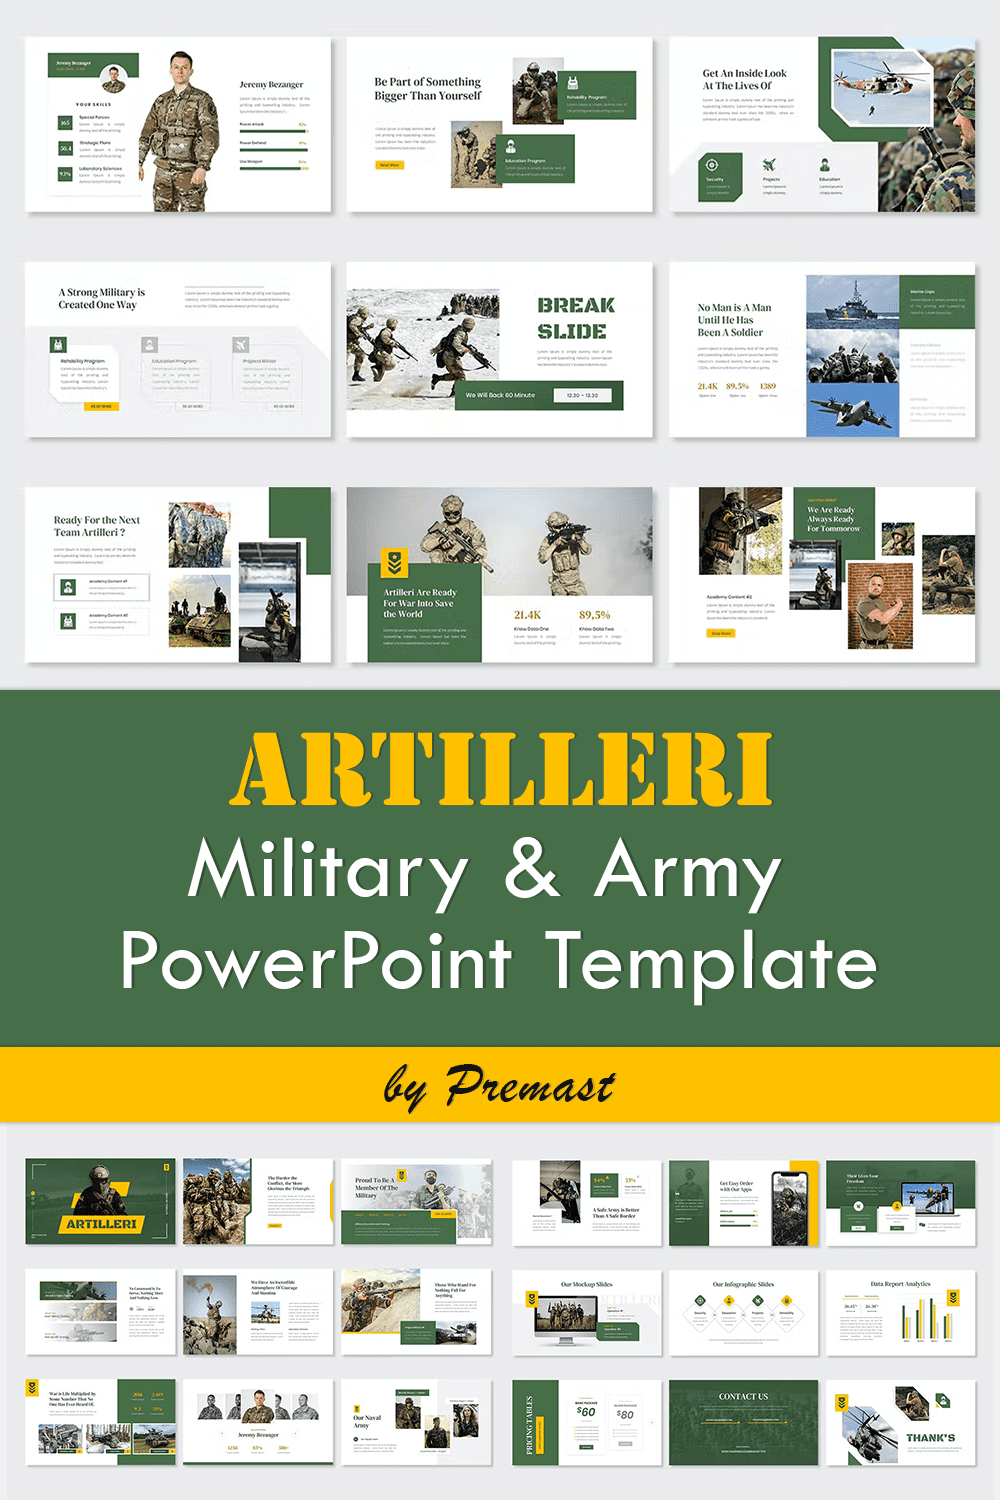 Artilleri — Military & Army PowerPoint Template - Pinterest.